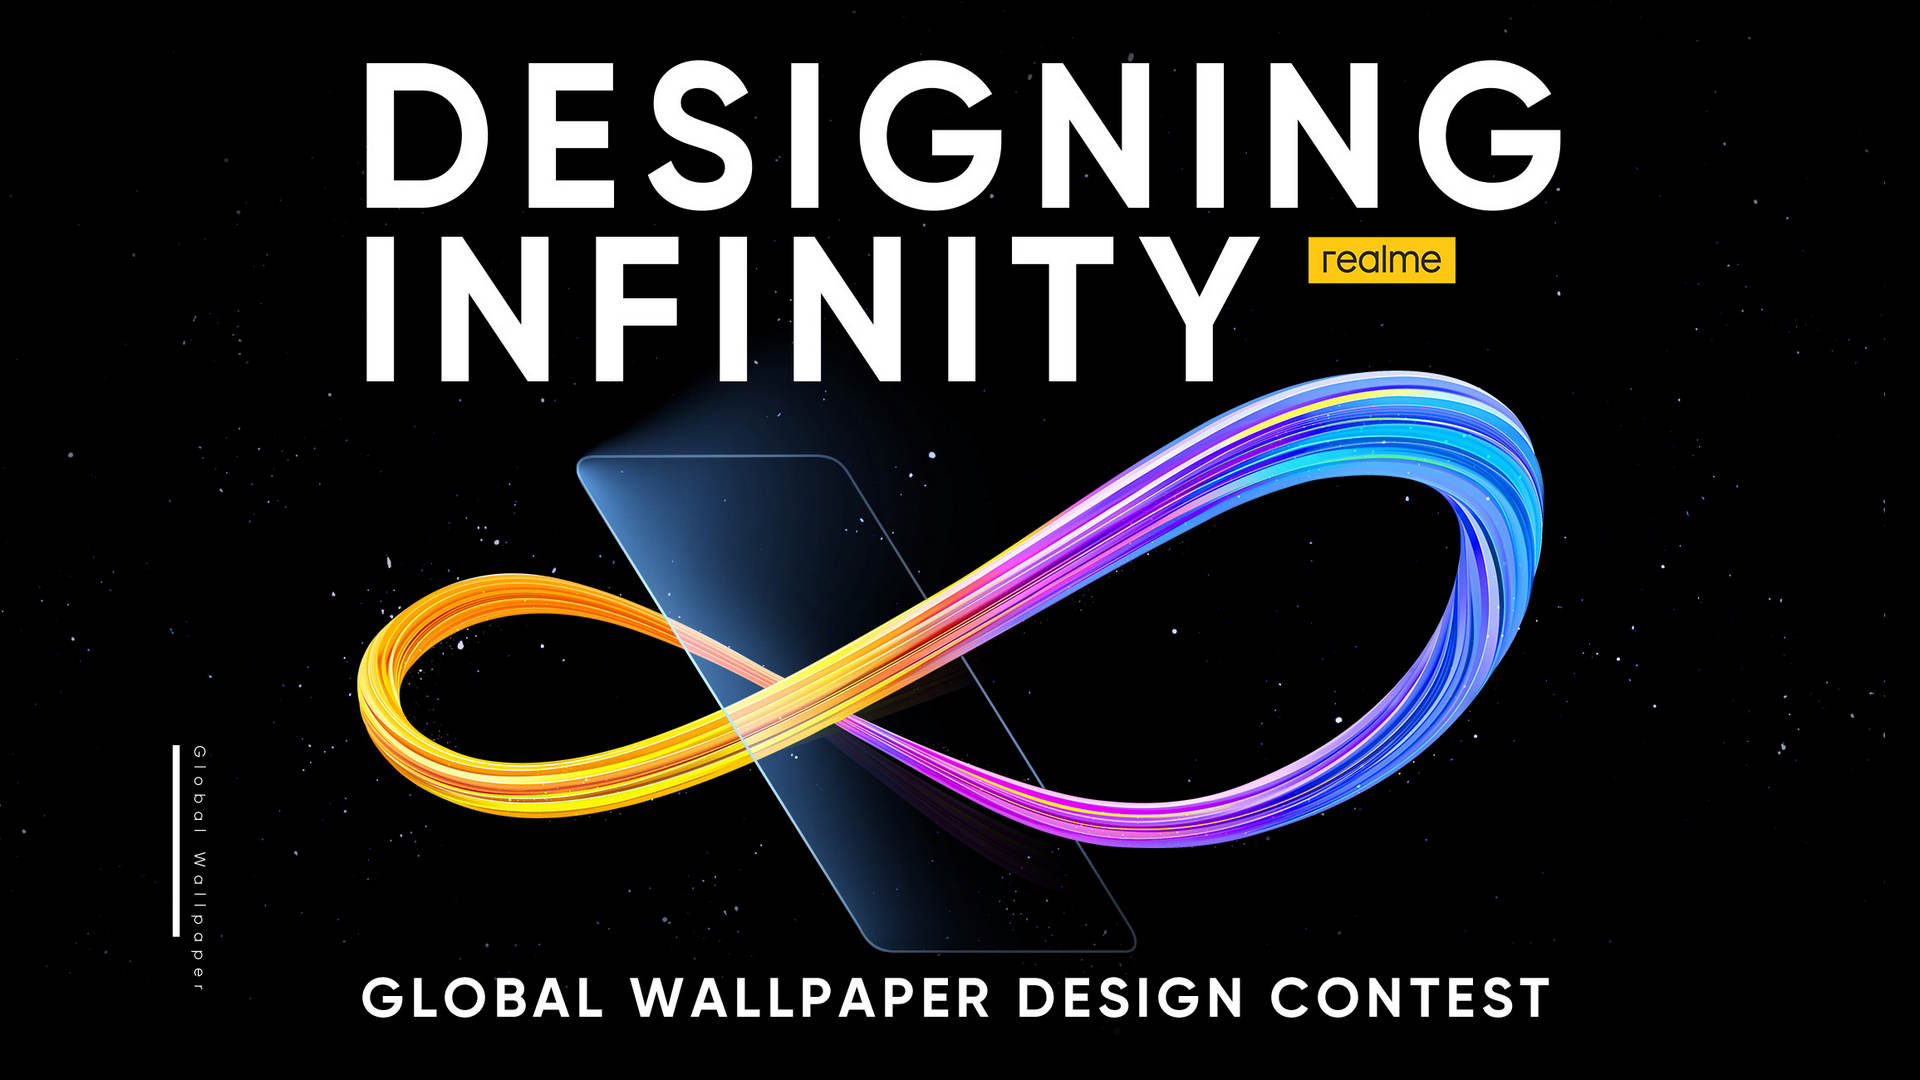 Realme global wallpaper design contest how to participate